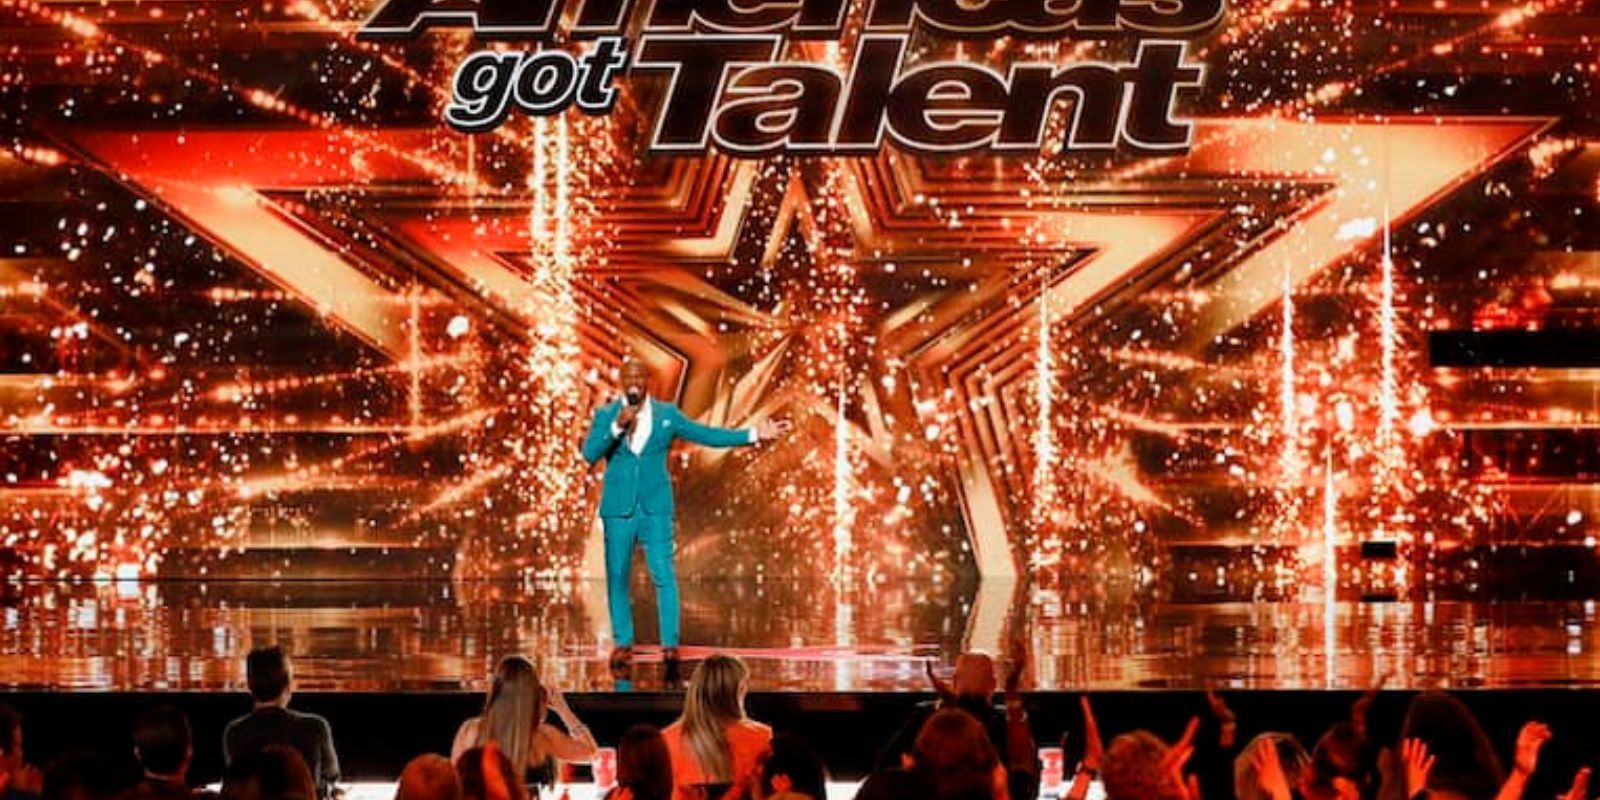 Terry Crews hosting Americas Got Talent